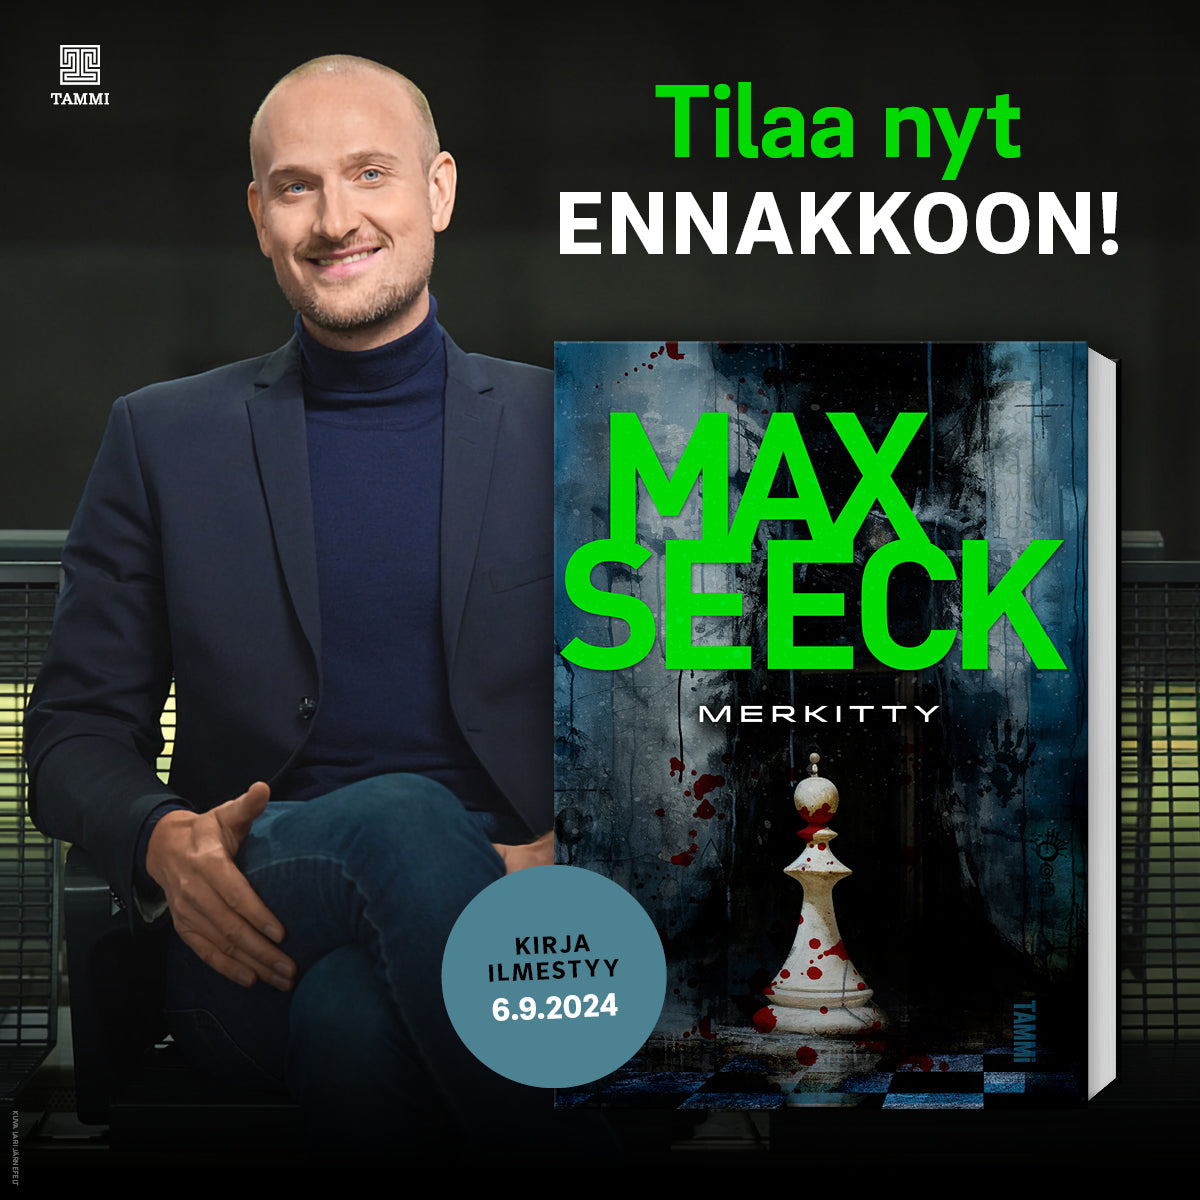 Max Seeck Merkitty